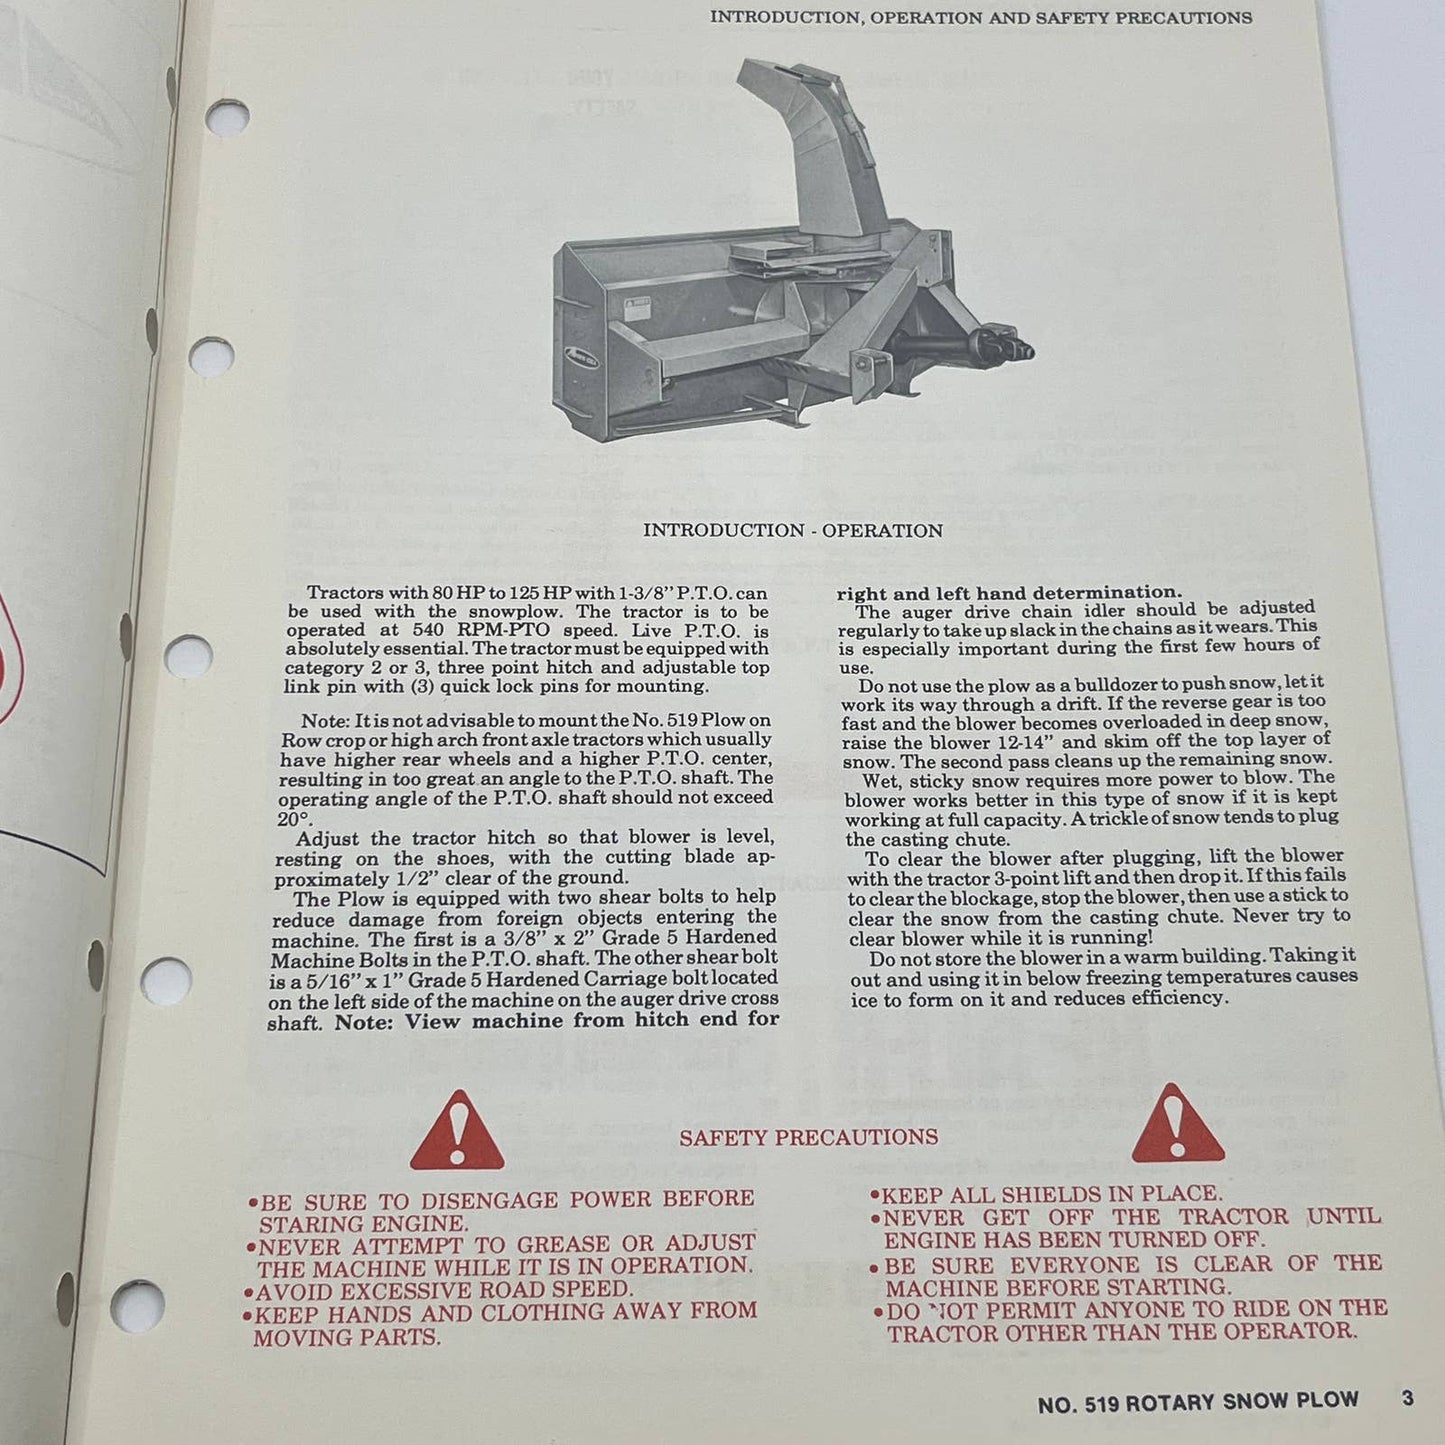 Original 1979 New Idea No 519 Three Point Hitch 101" Rotary Snow Plow Manual TB9